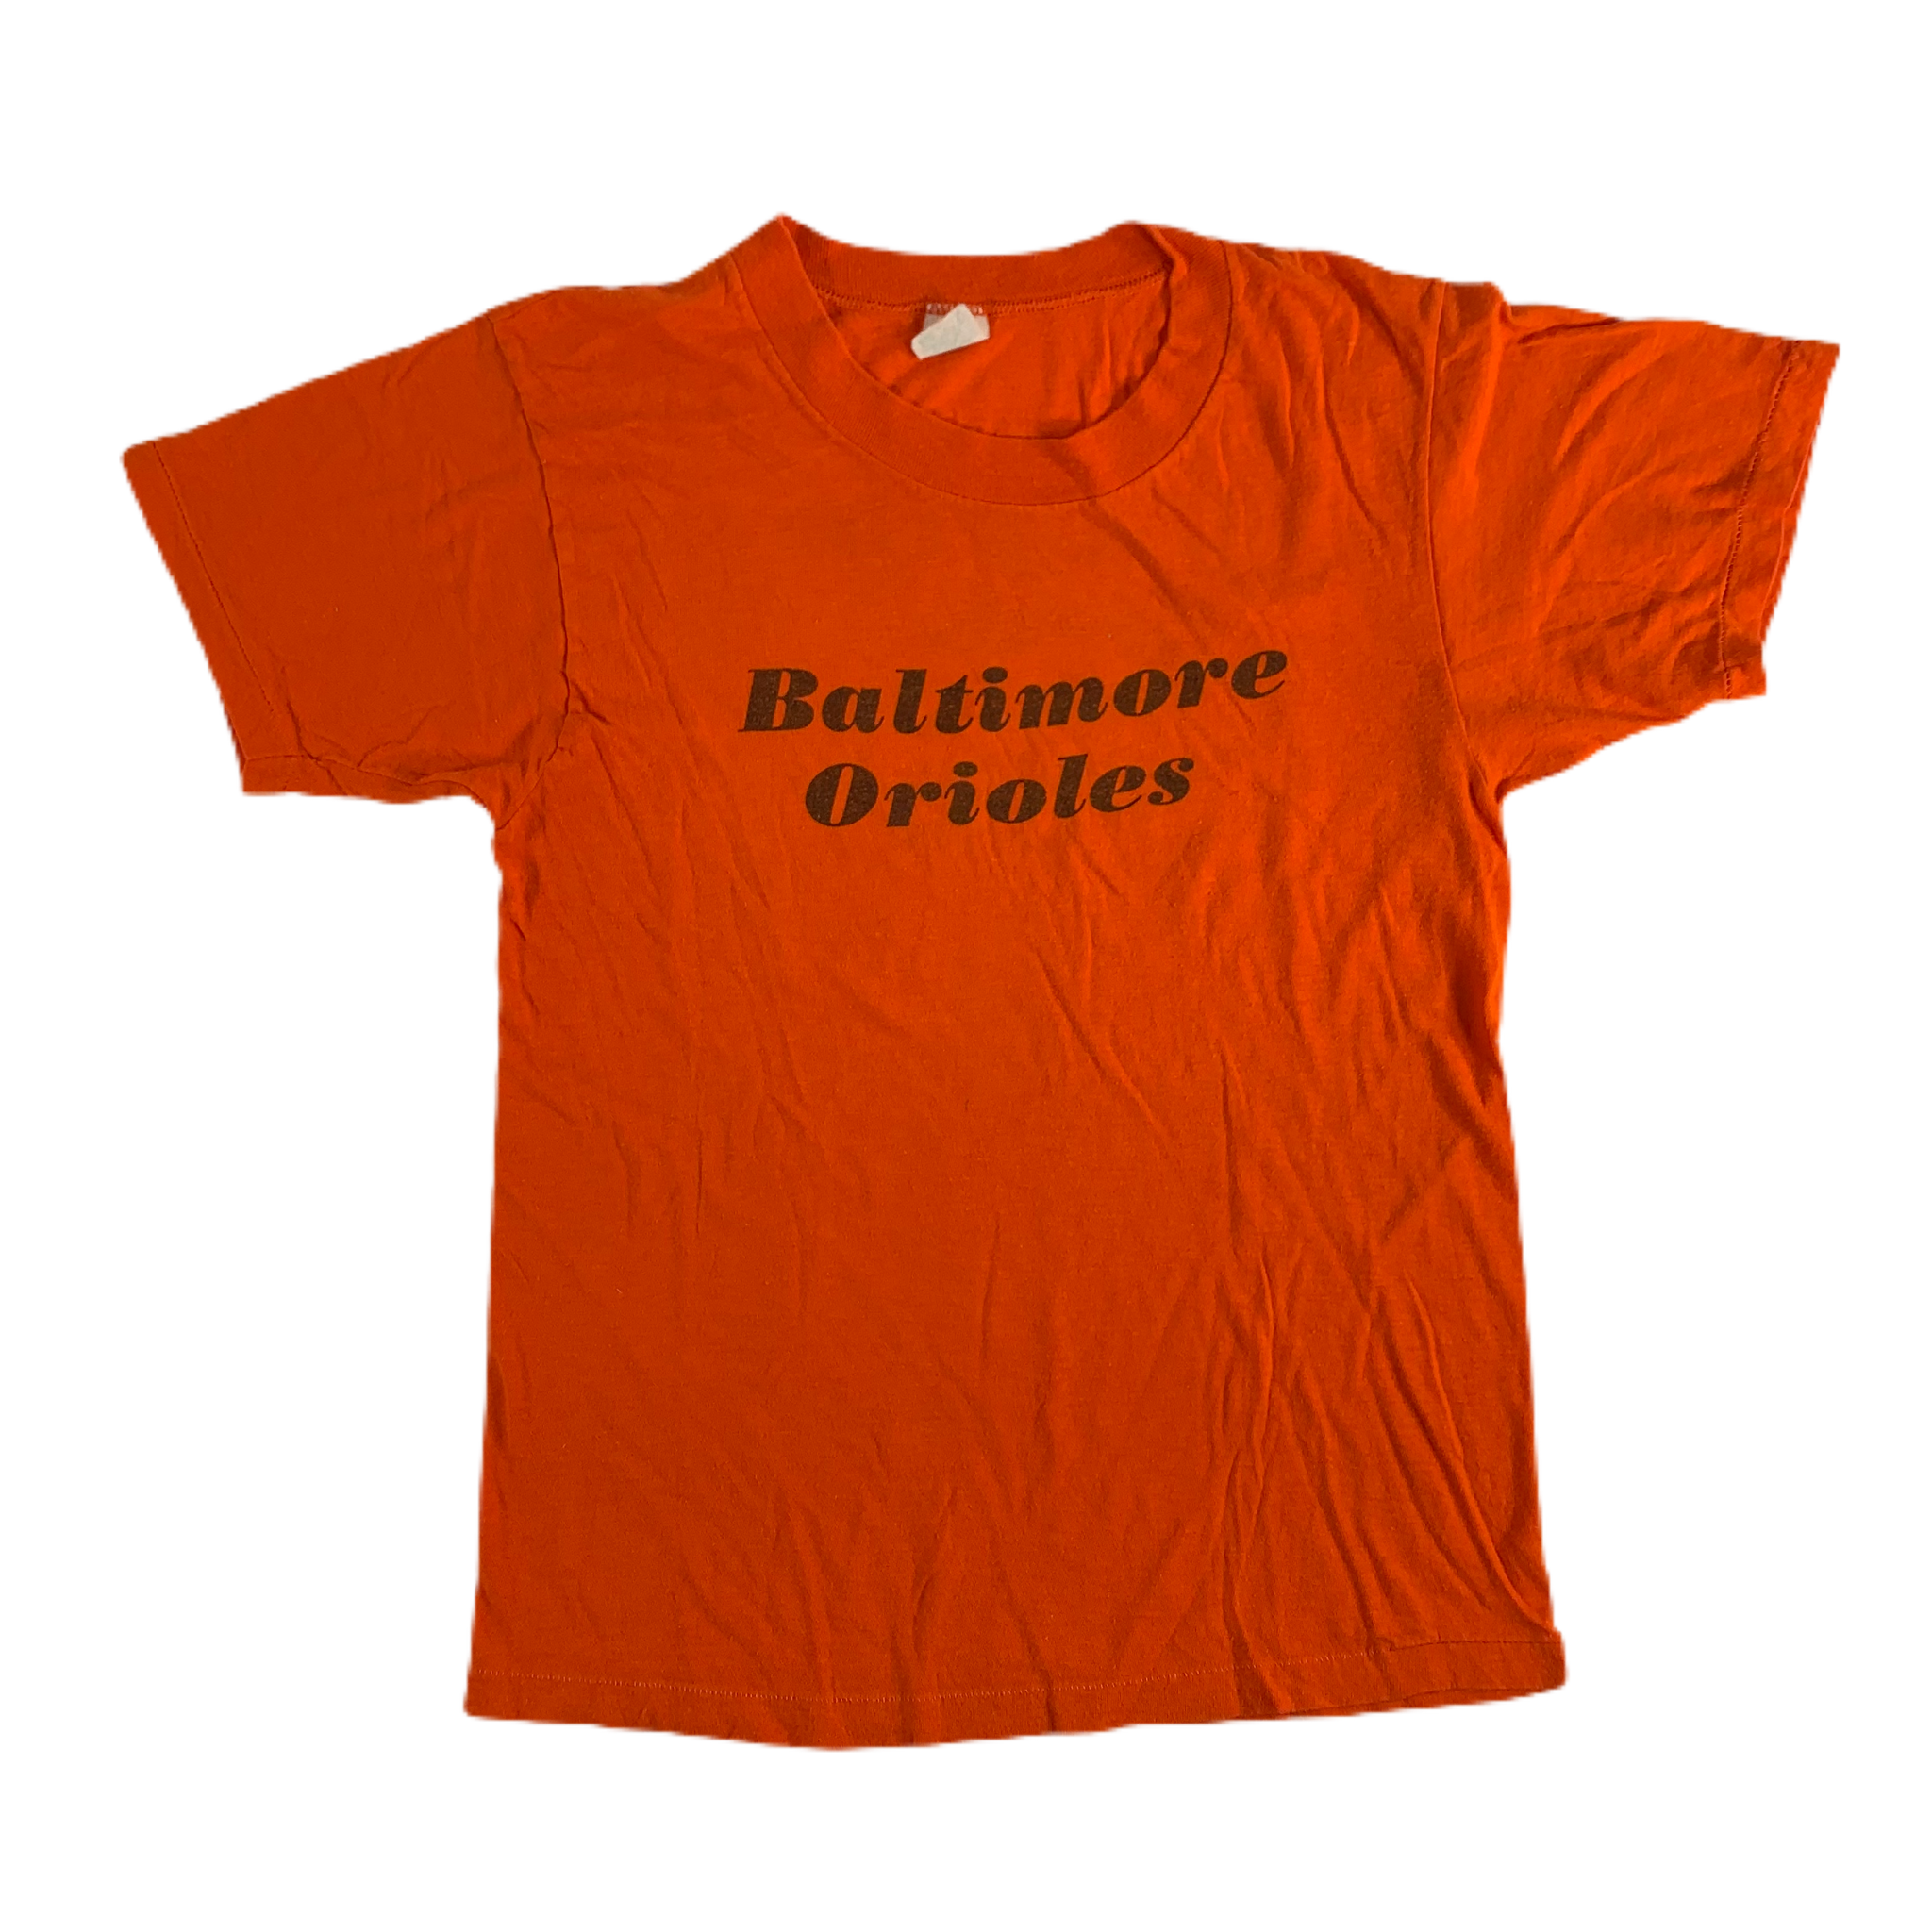 vintage baltimore orioles t shirt